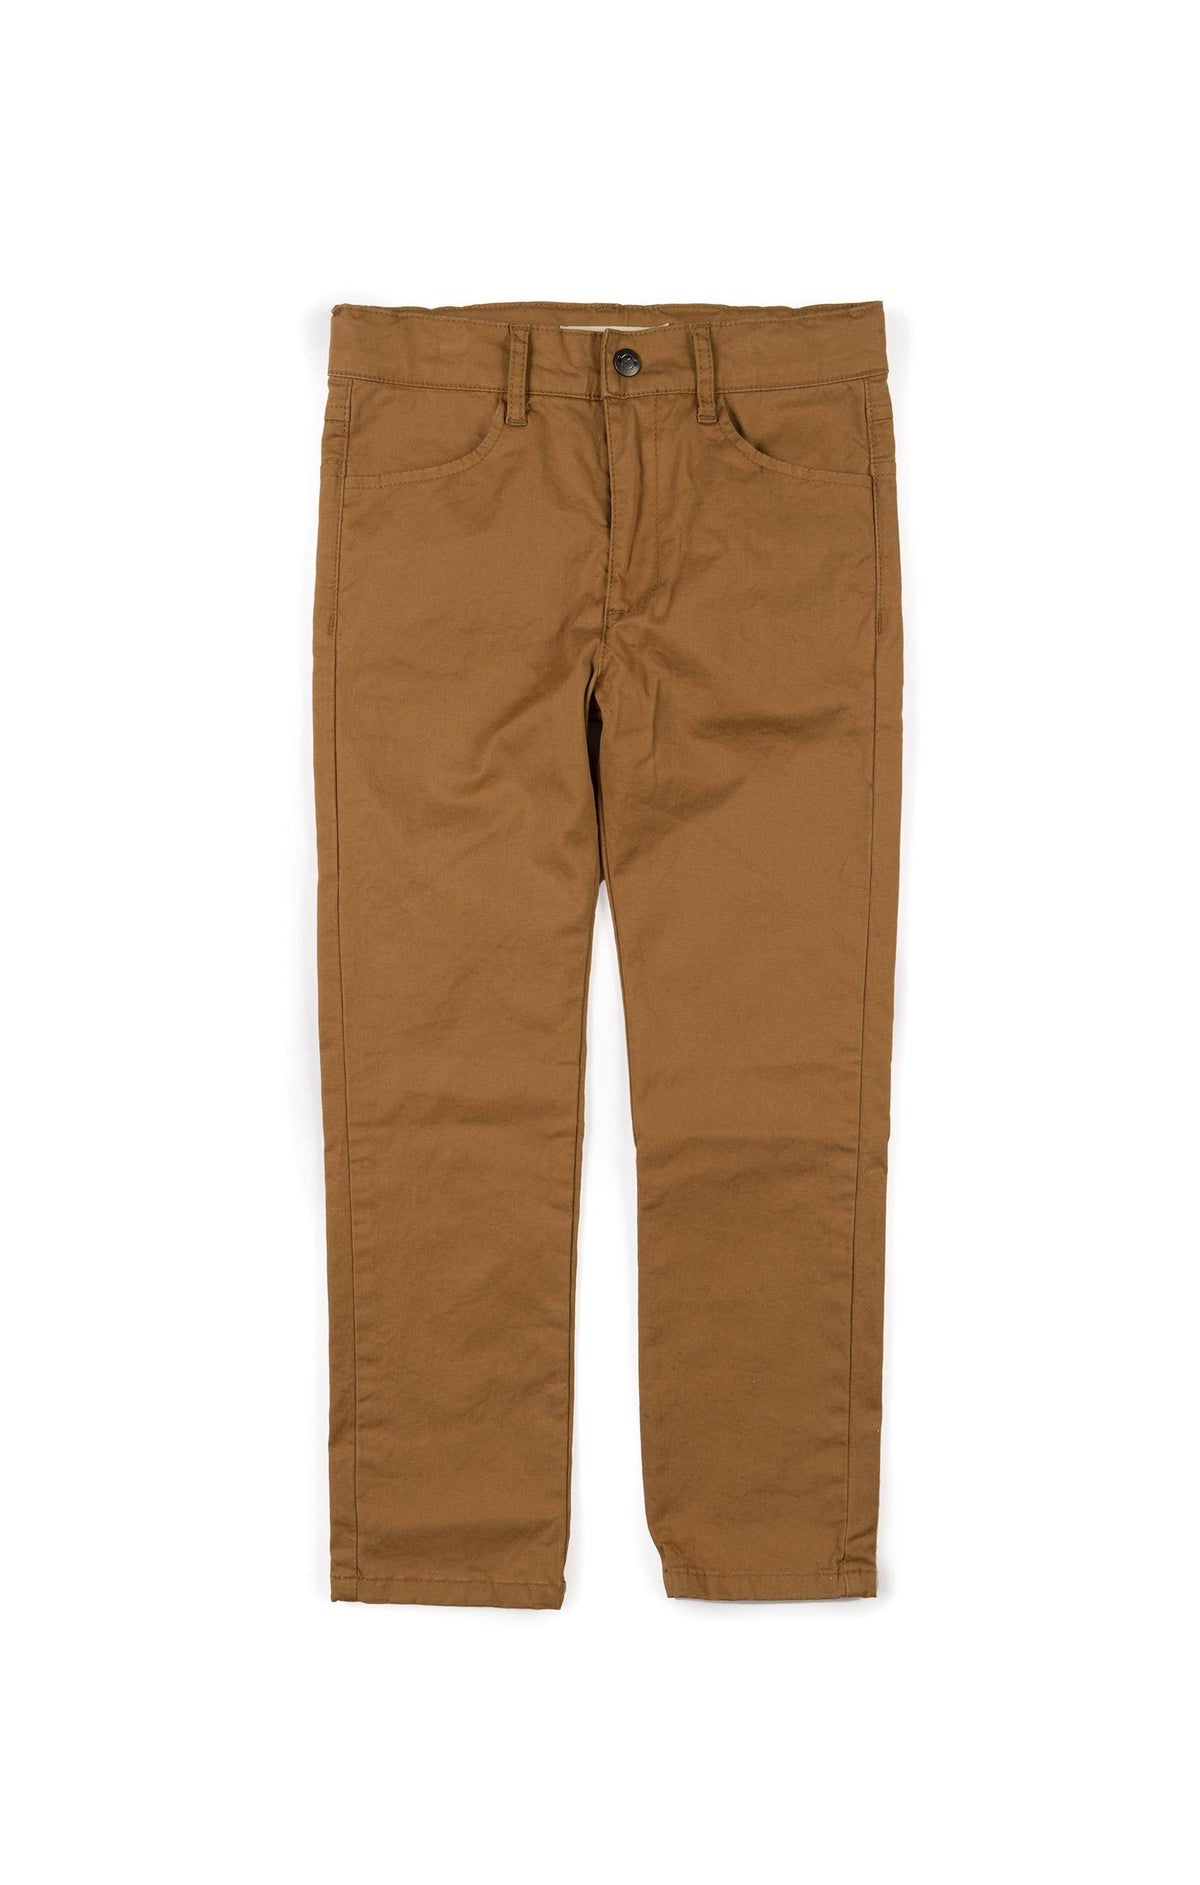 Shop Online Boys Brown Cargo Pants at ₹953